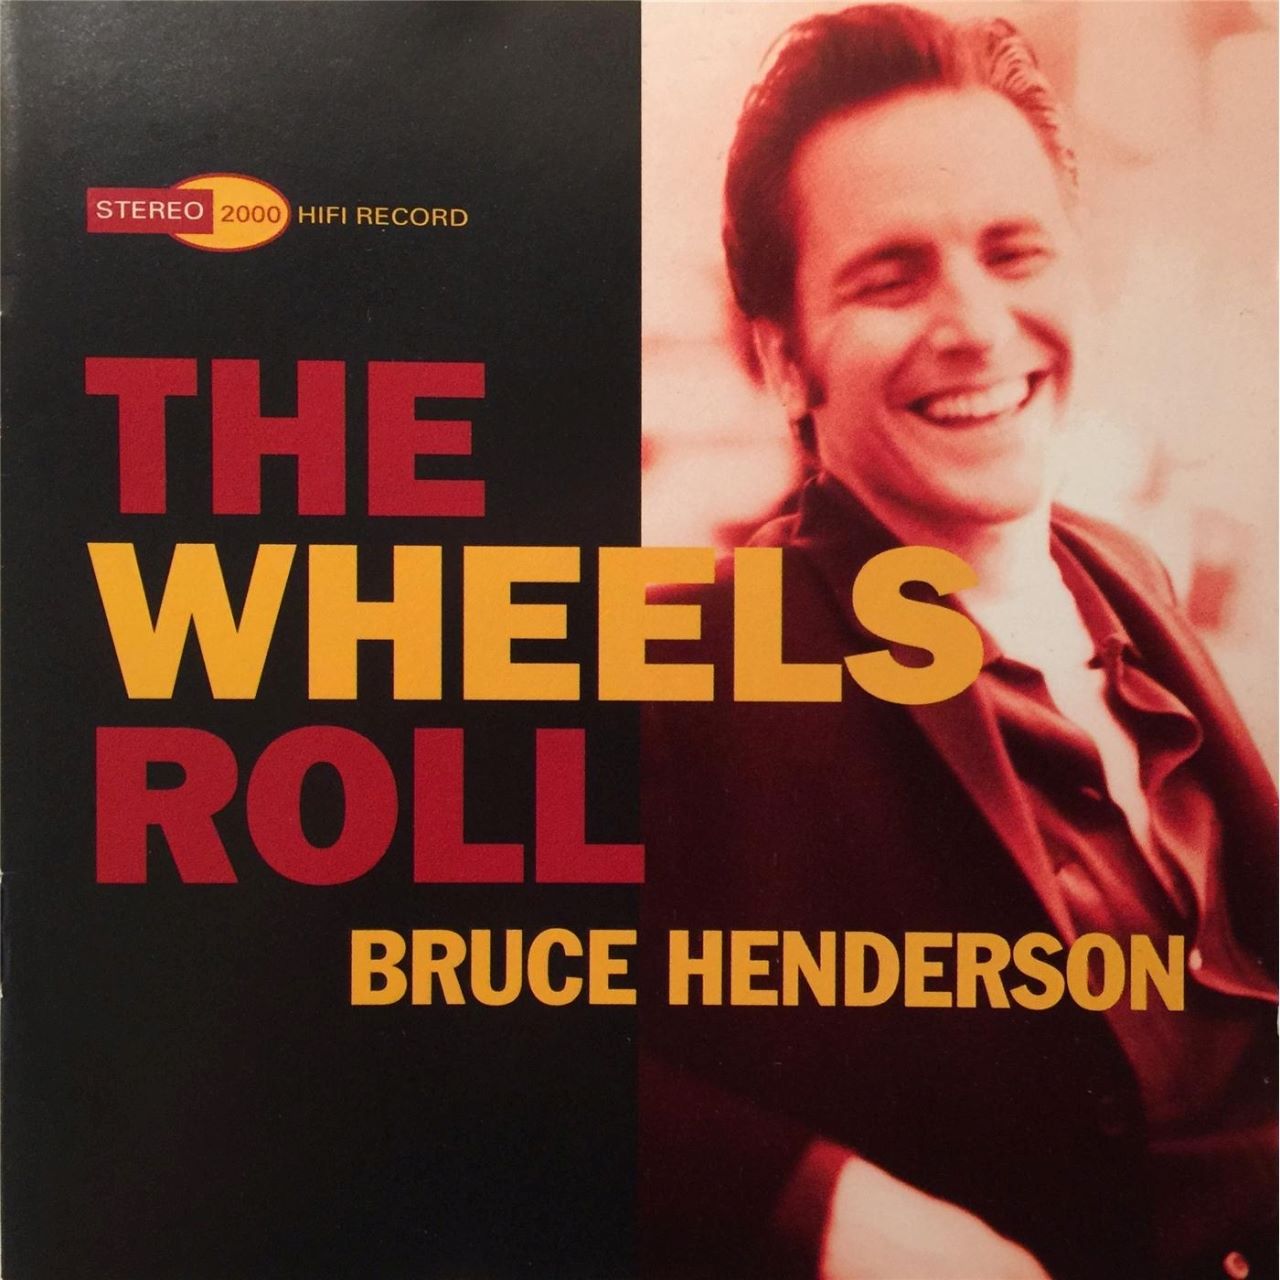 Bruce Henderson - The Wheels Rolls cover album